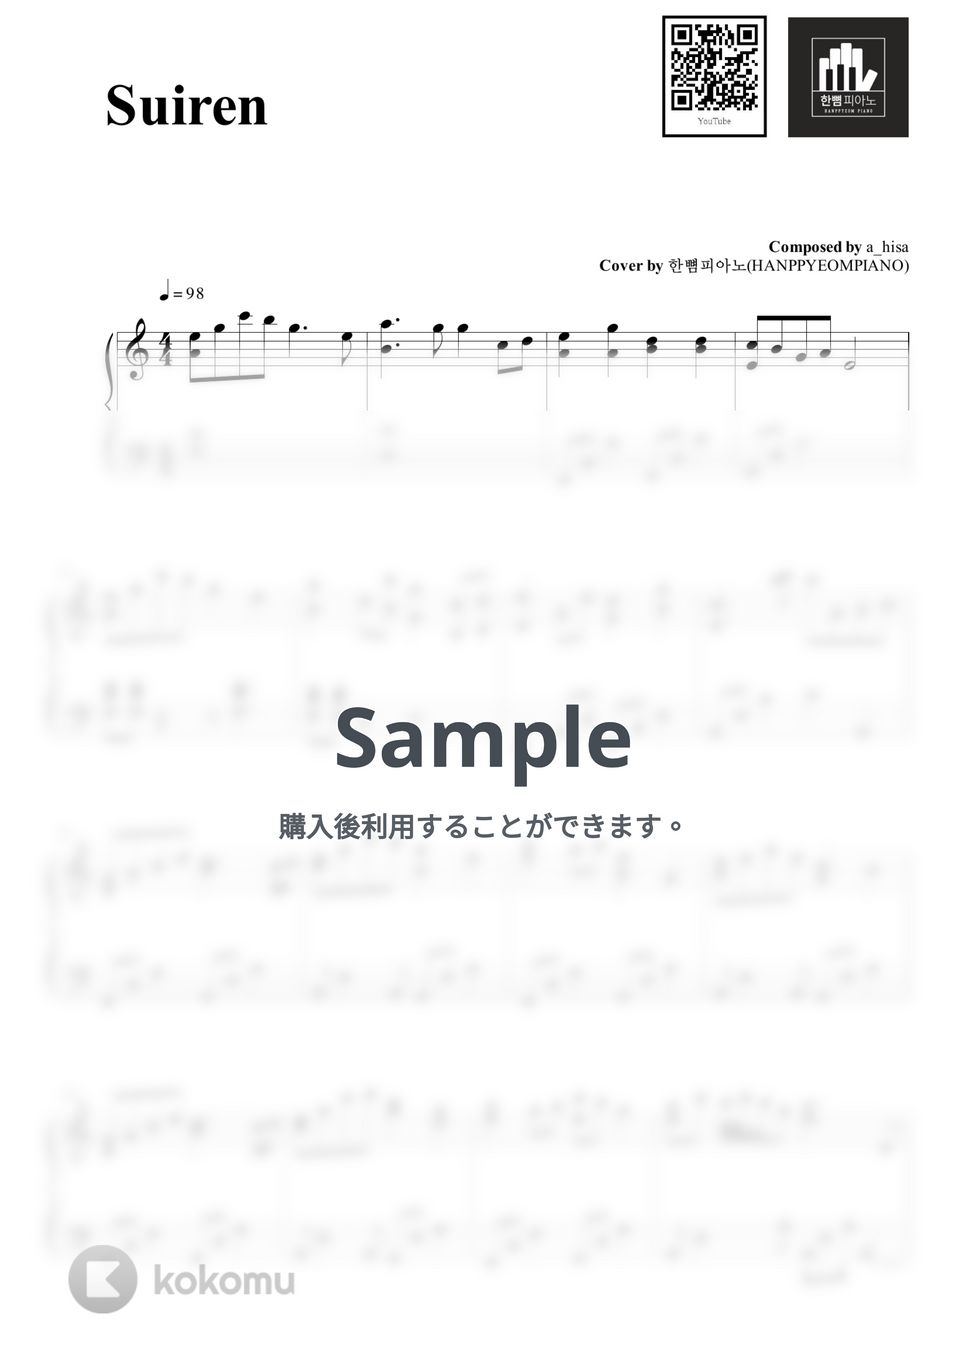 a_hisa - Suiren (PIANO COVER) by HANPPYEOMPIANO